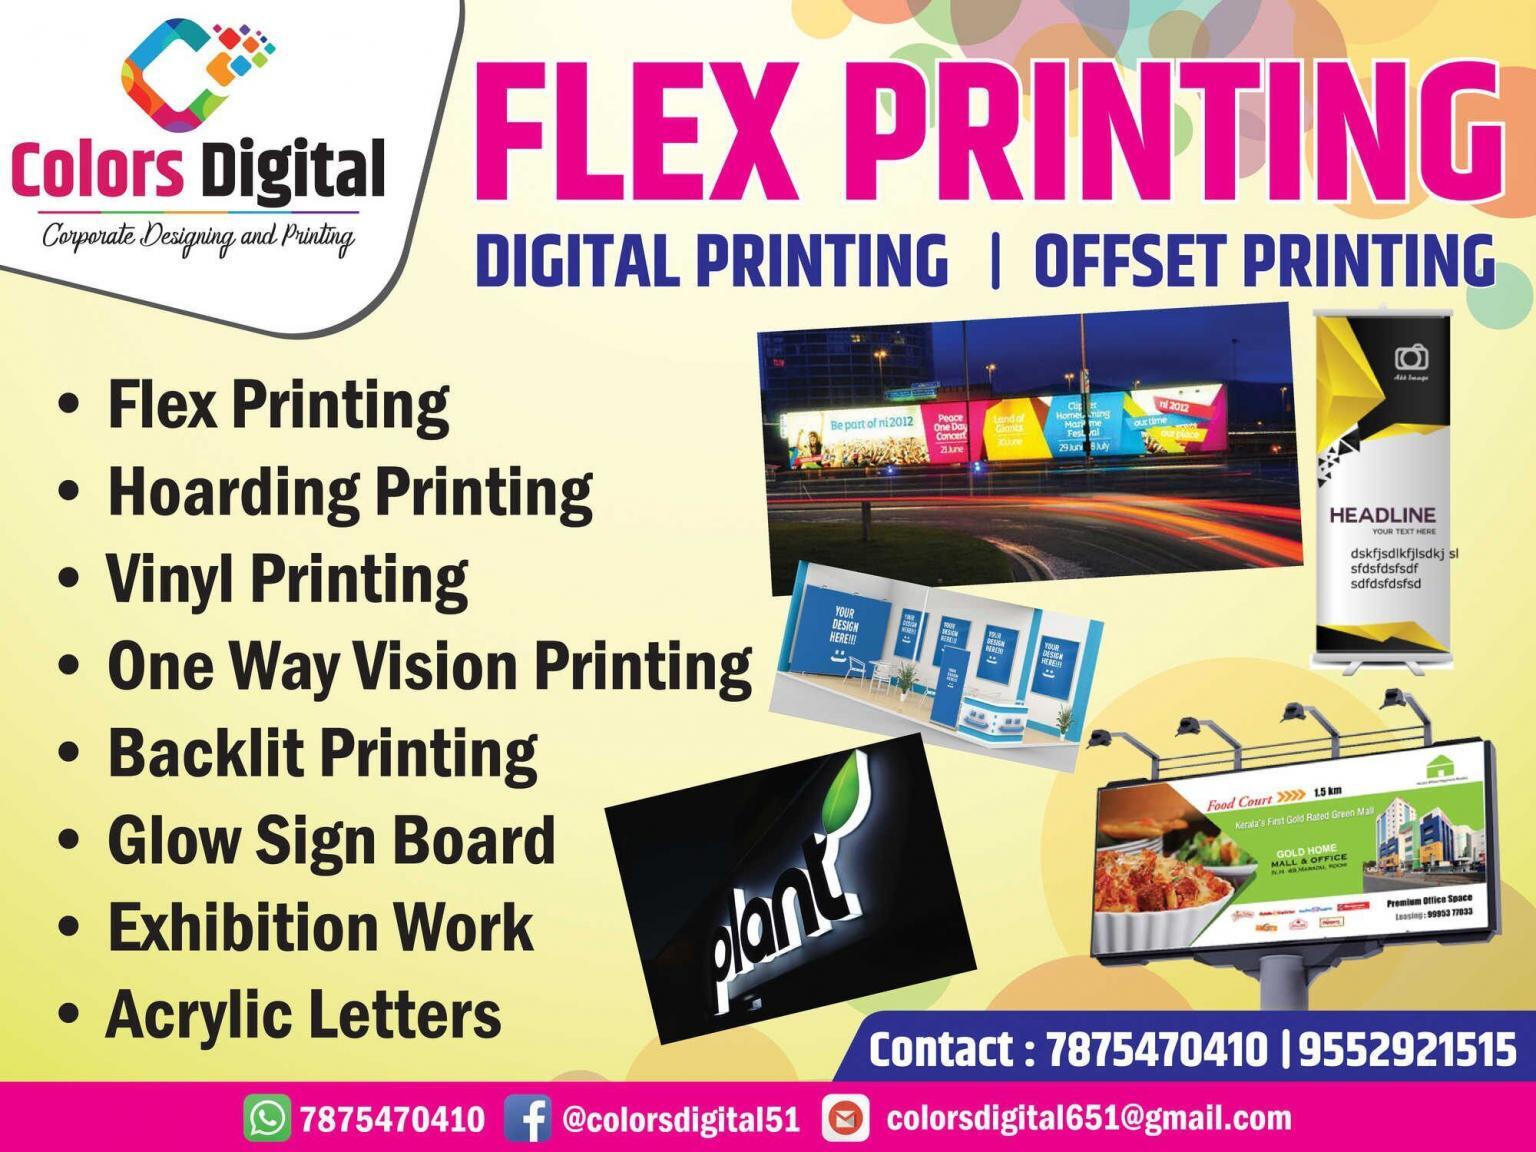 flex printing business plan in hindi